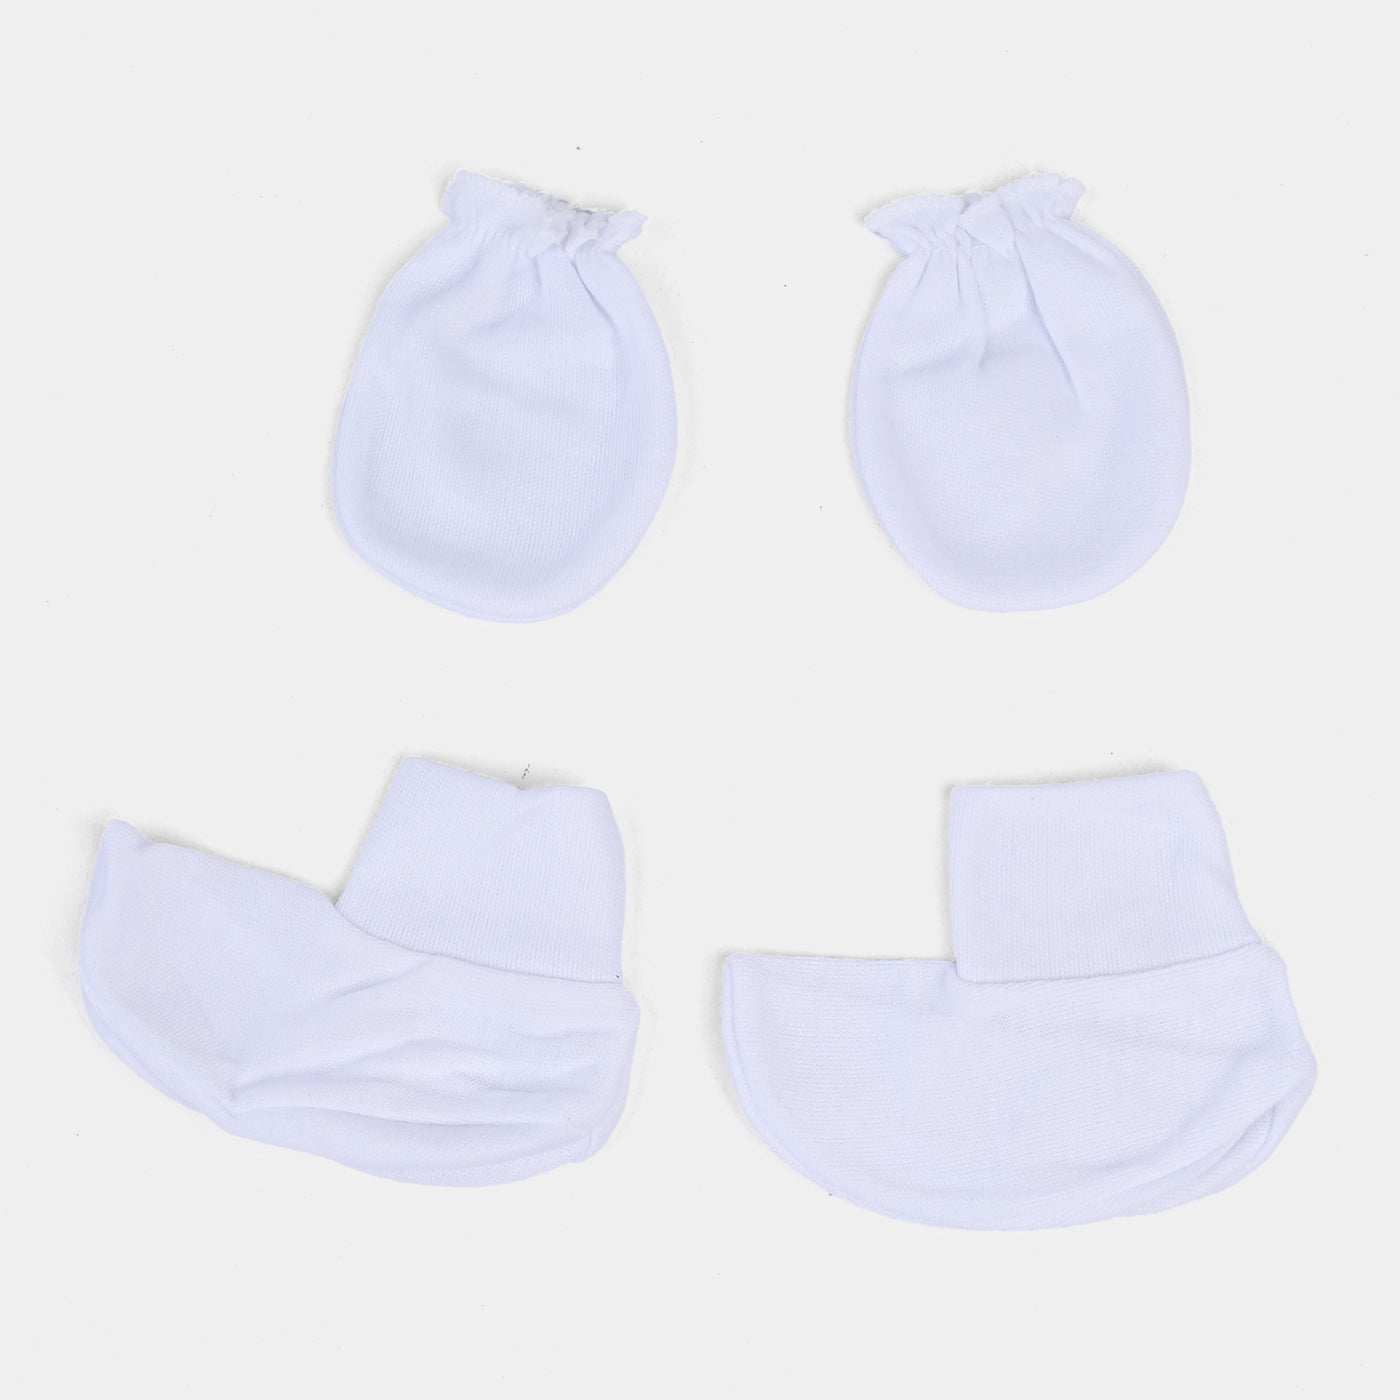 Baby Cap/Hat + Socks + Mittens 3PCs Set